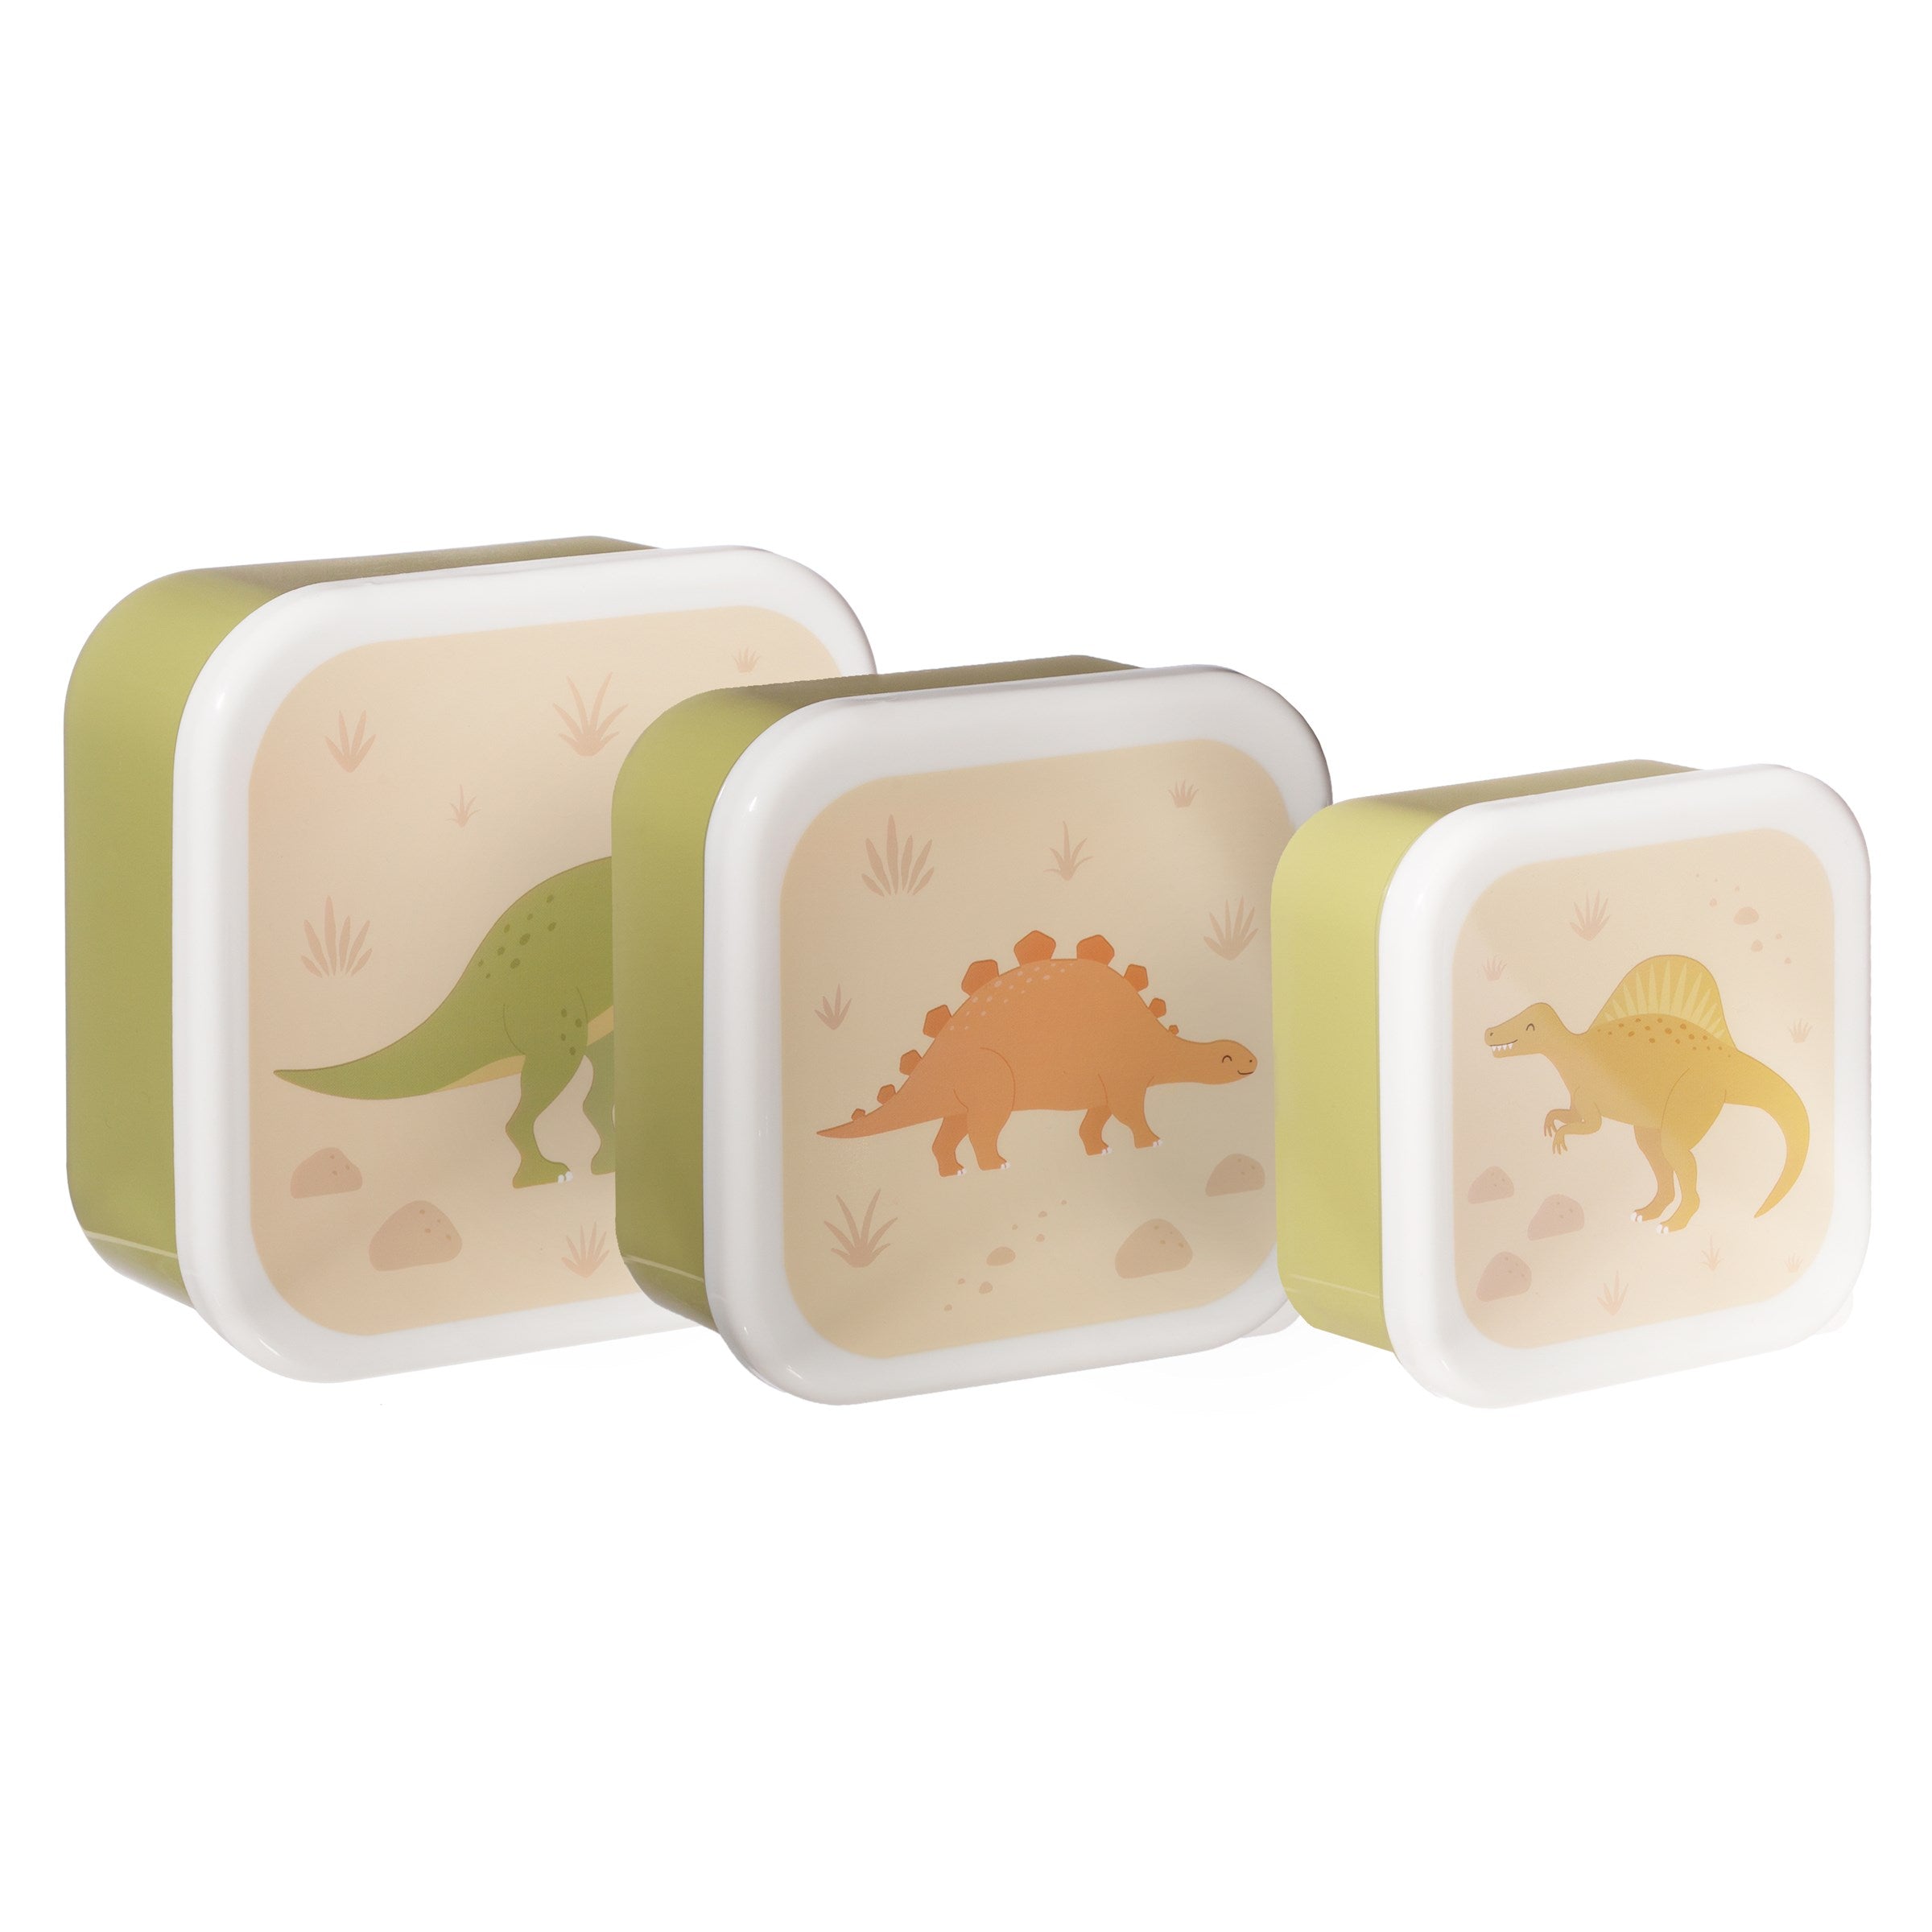 Sass & Belle Desert Dino's Lunch / Snack Boxes - Set of 3